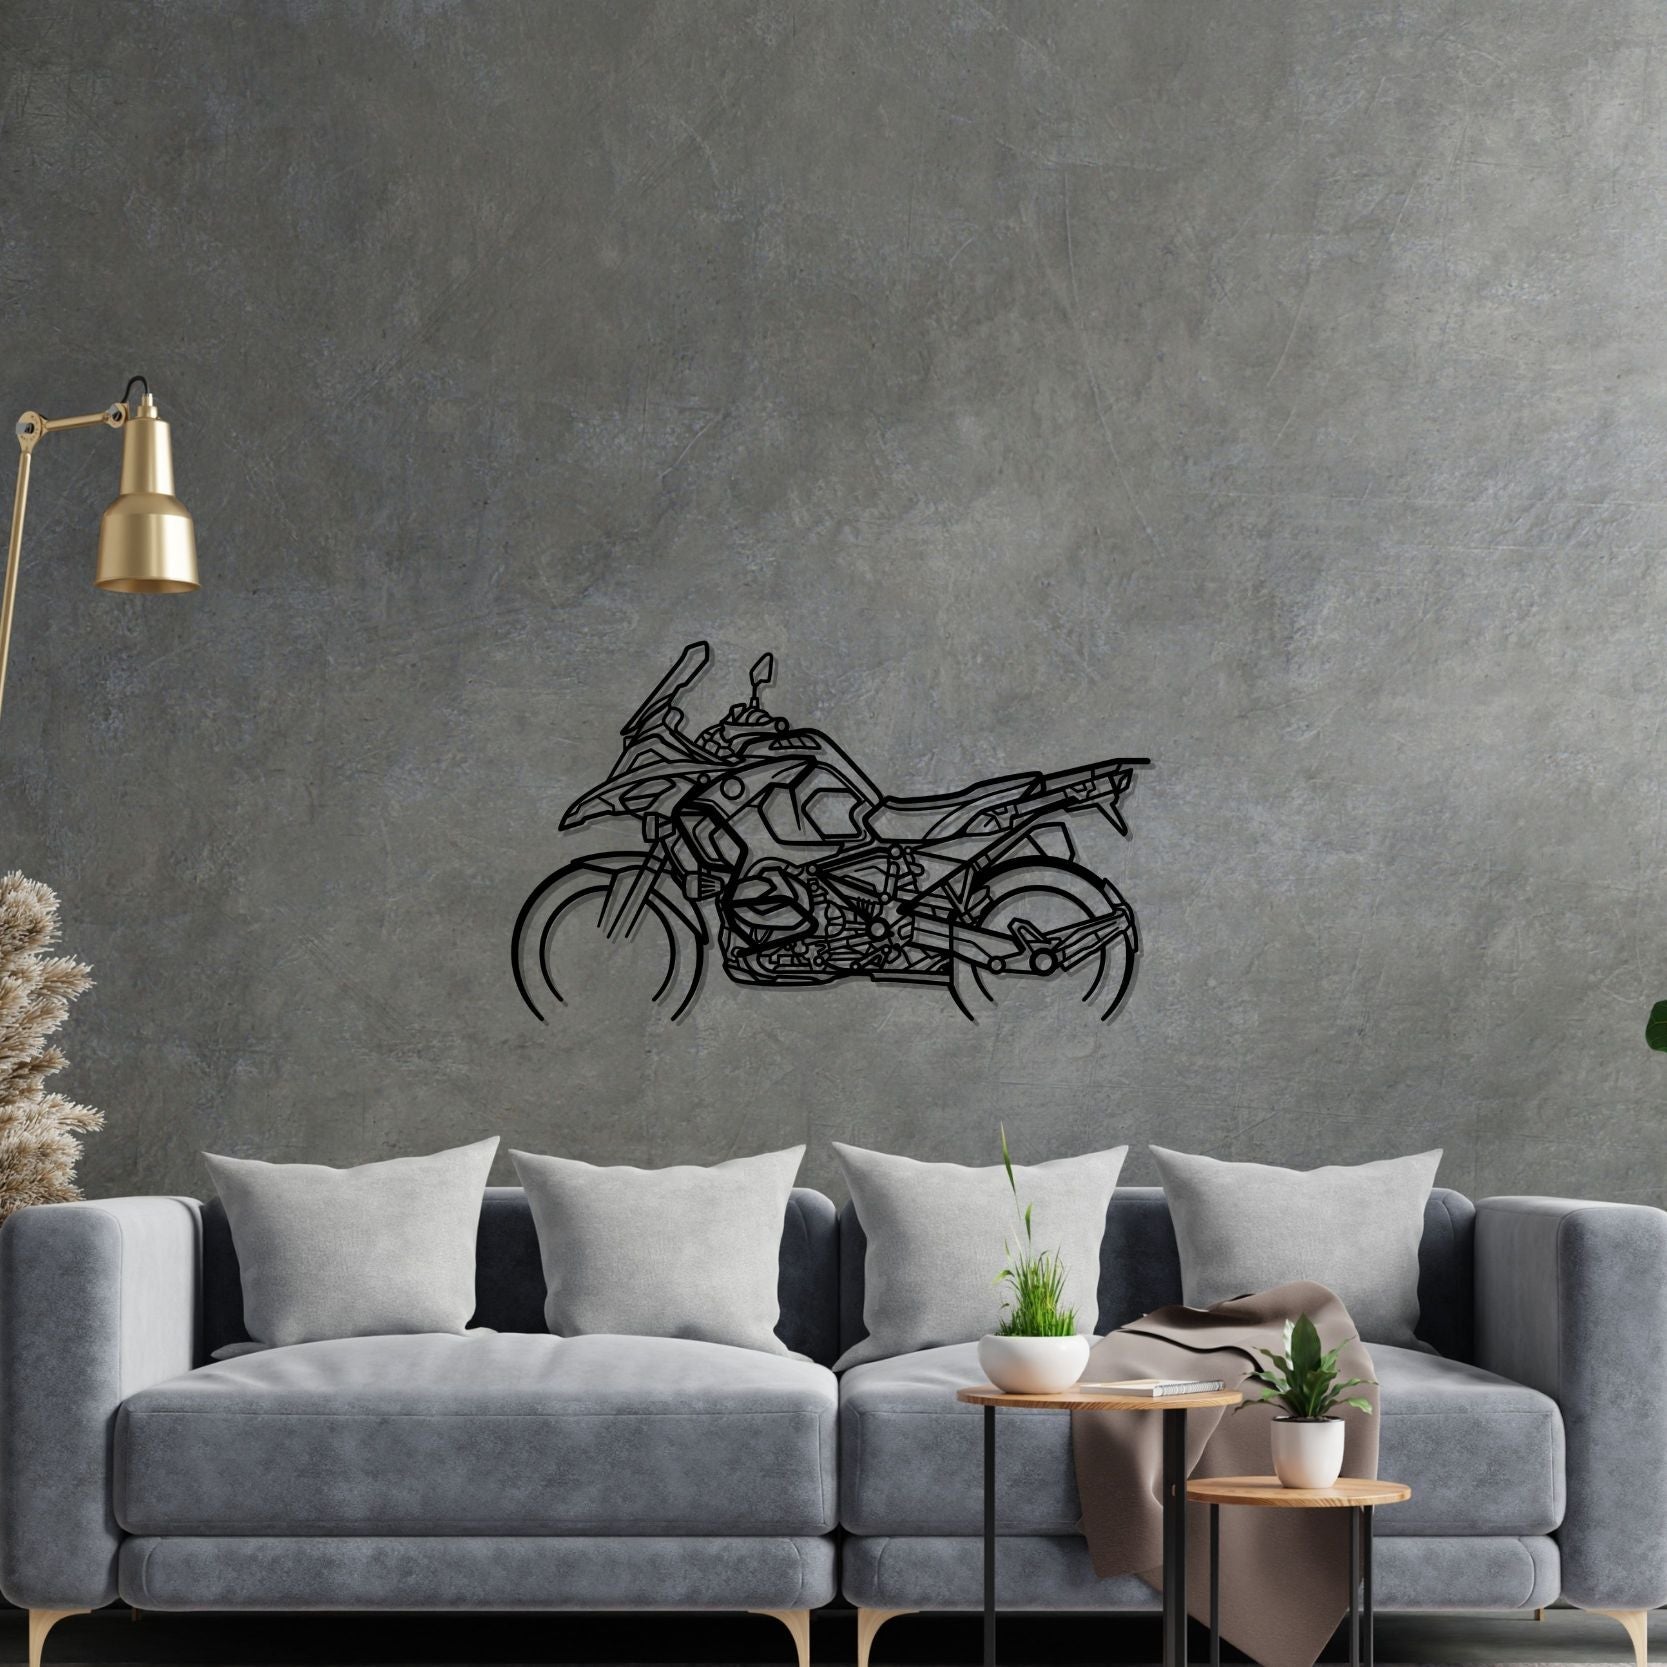 Motorcycle Metal Signs - Motorcycle Wall Art - Metal Signs For Garage - Garage Decorations